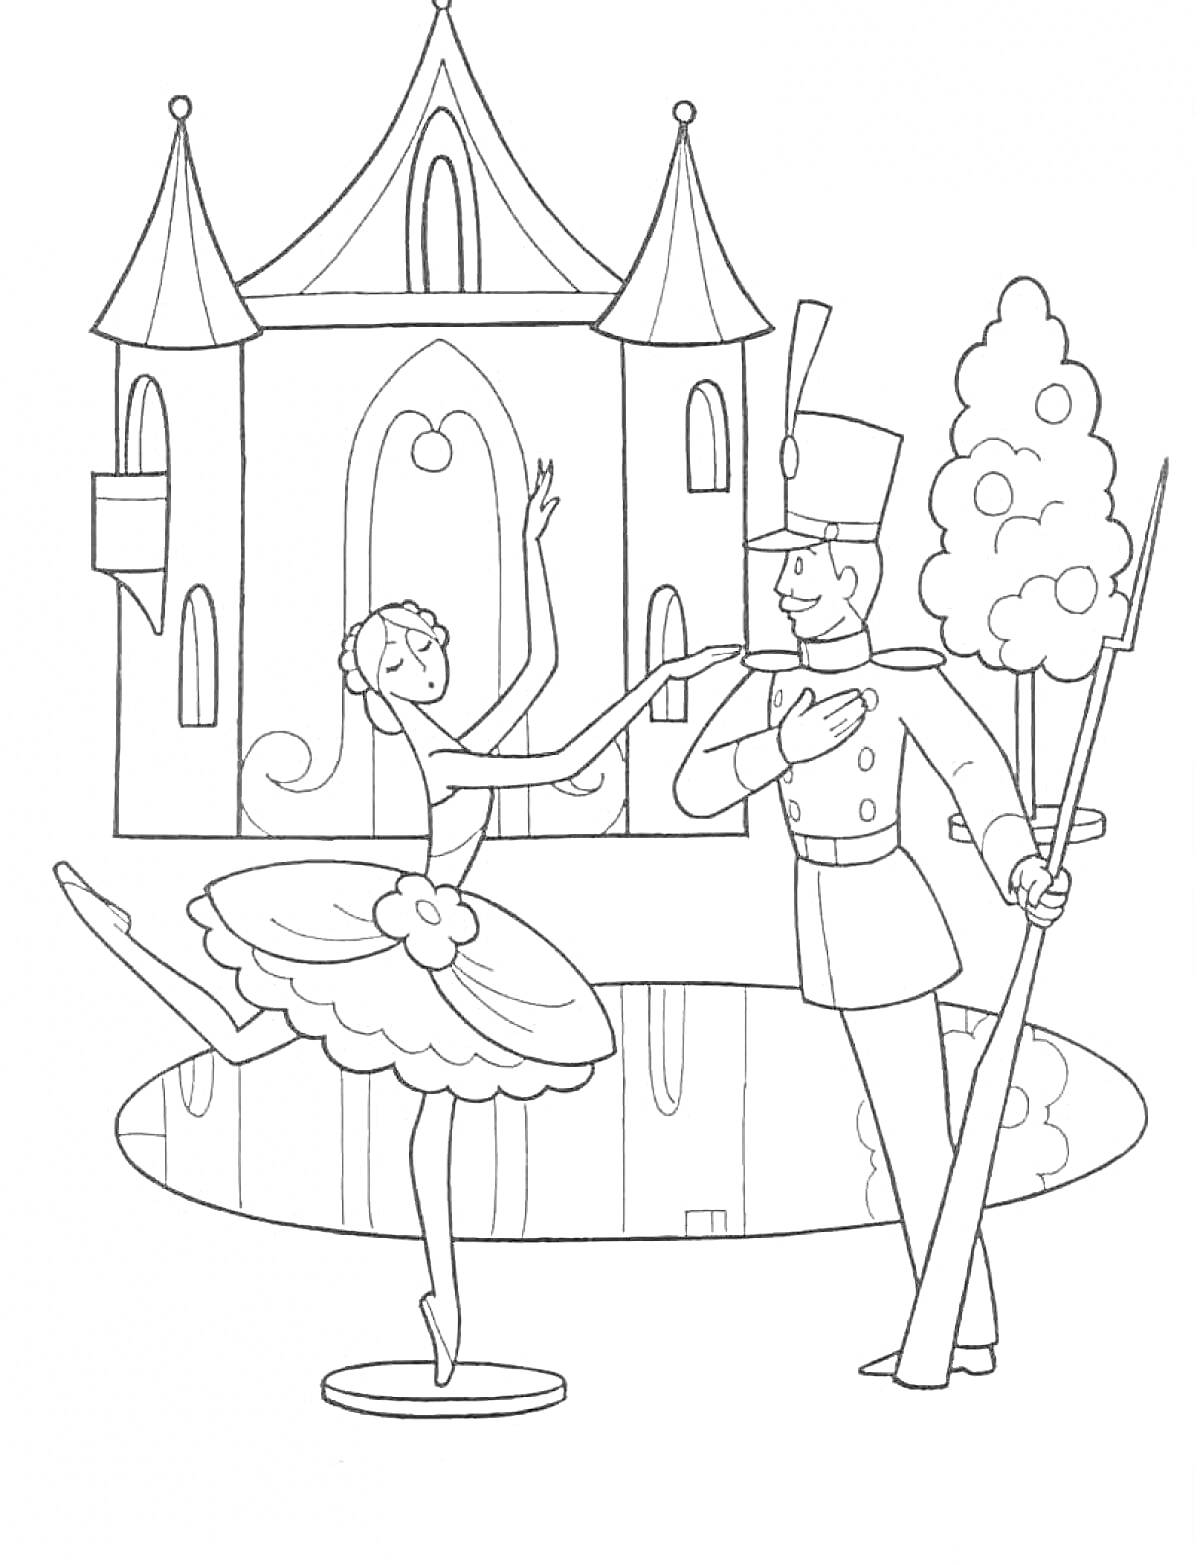 Оловянный солдатик и балерина перед замком